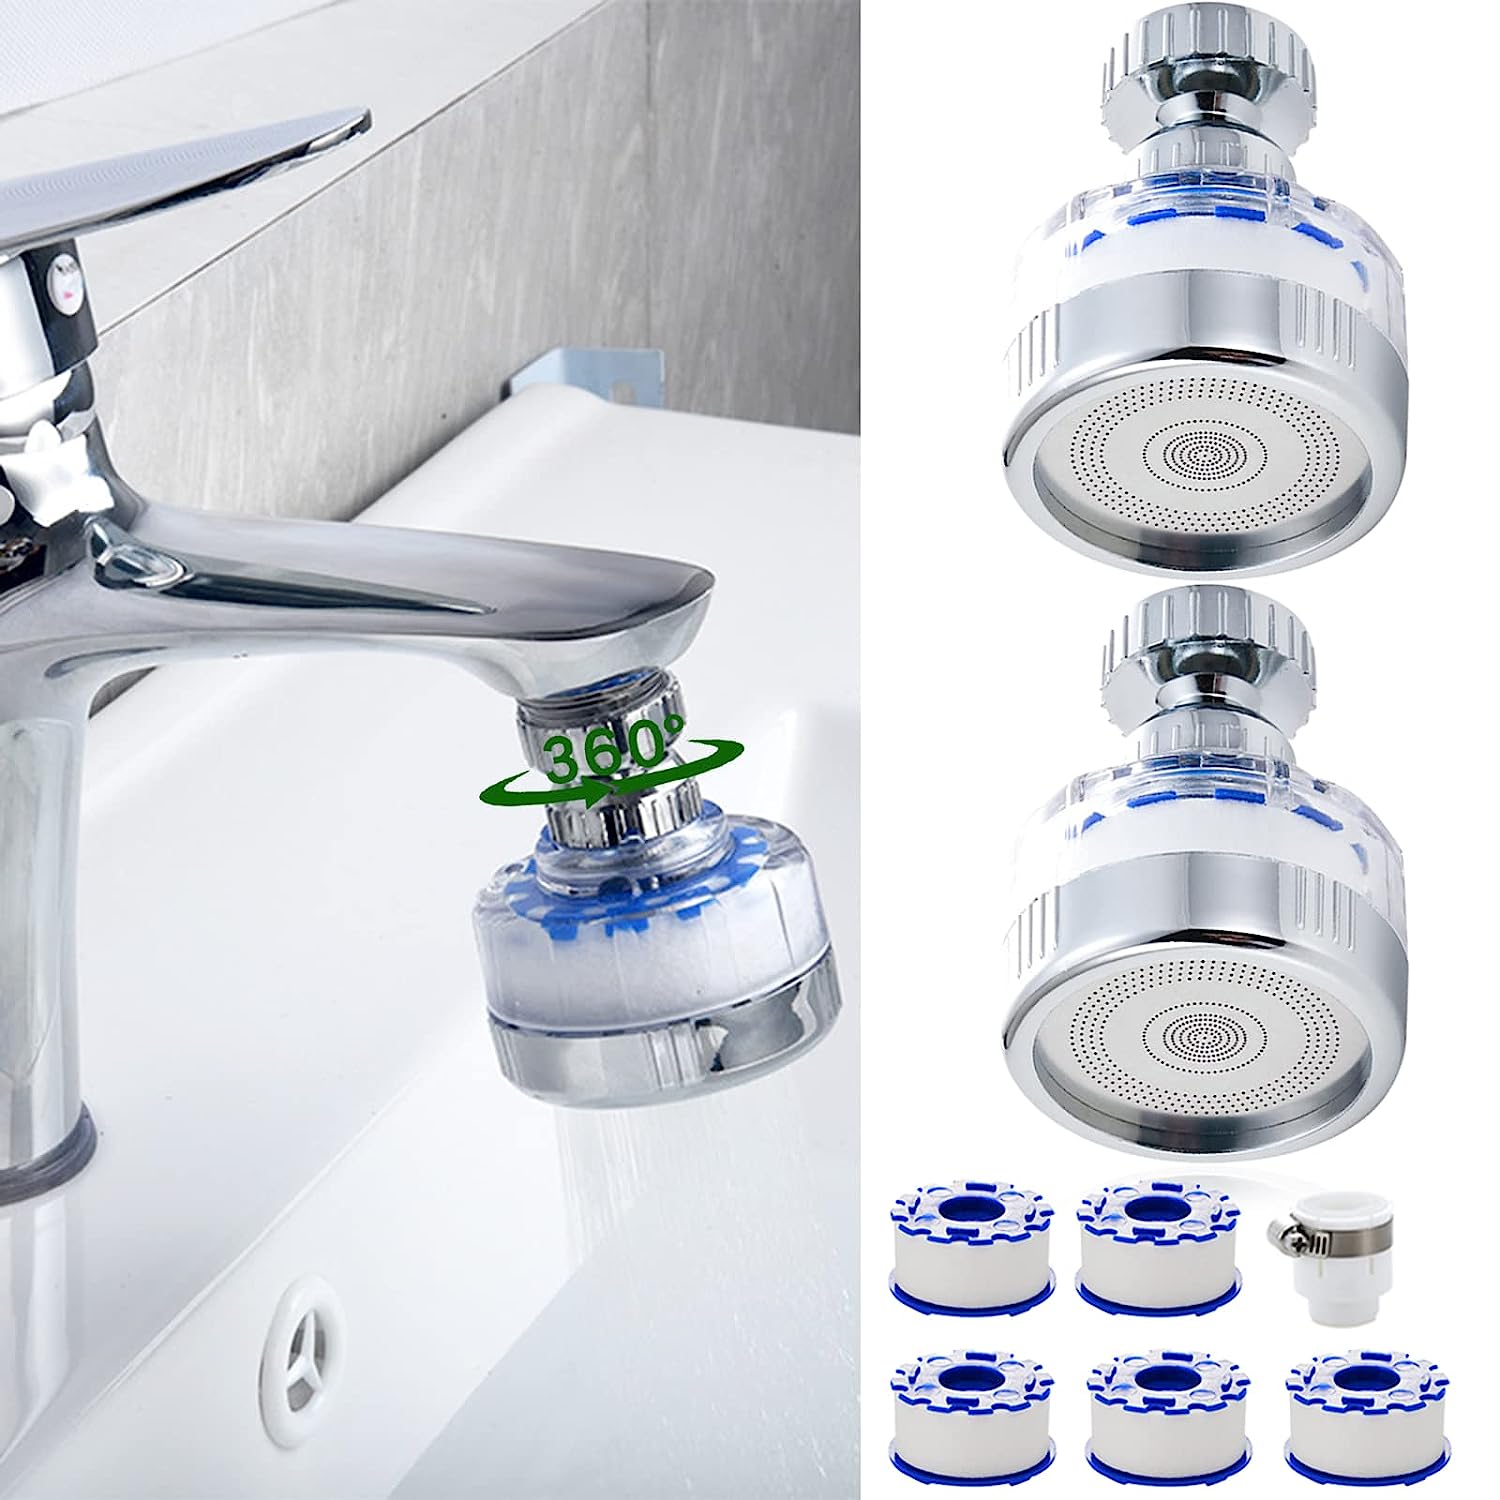 Sink Water Filter Faucet, Faucet Filter, 360° Rotating [...]